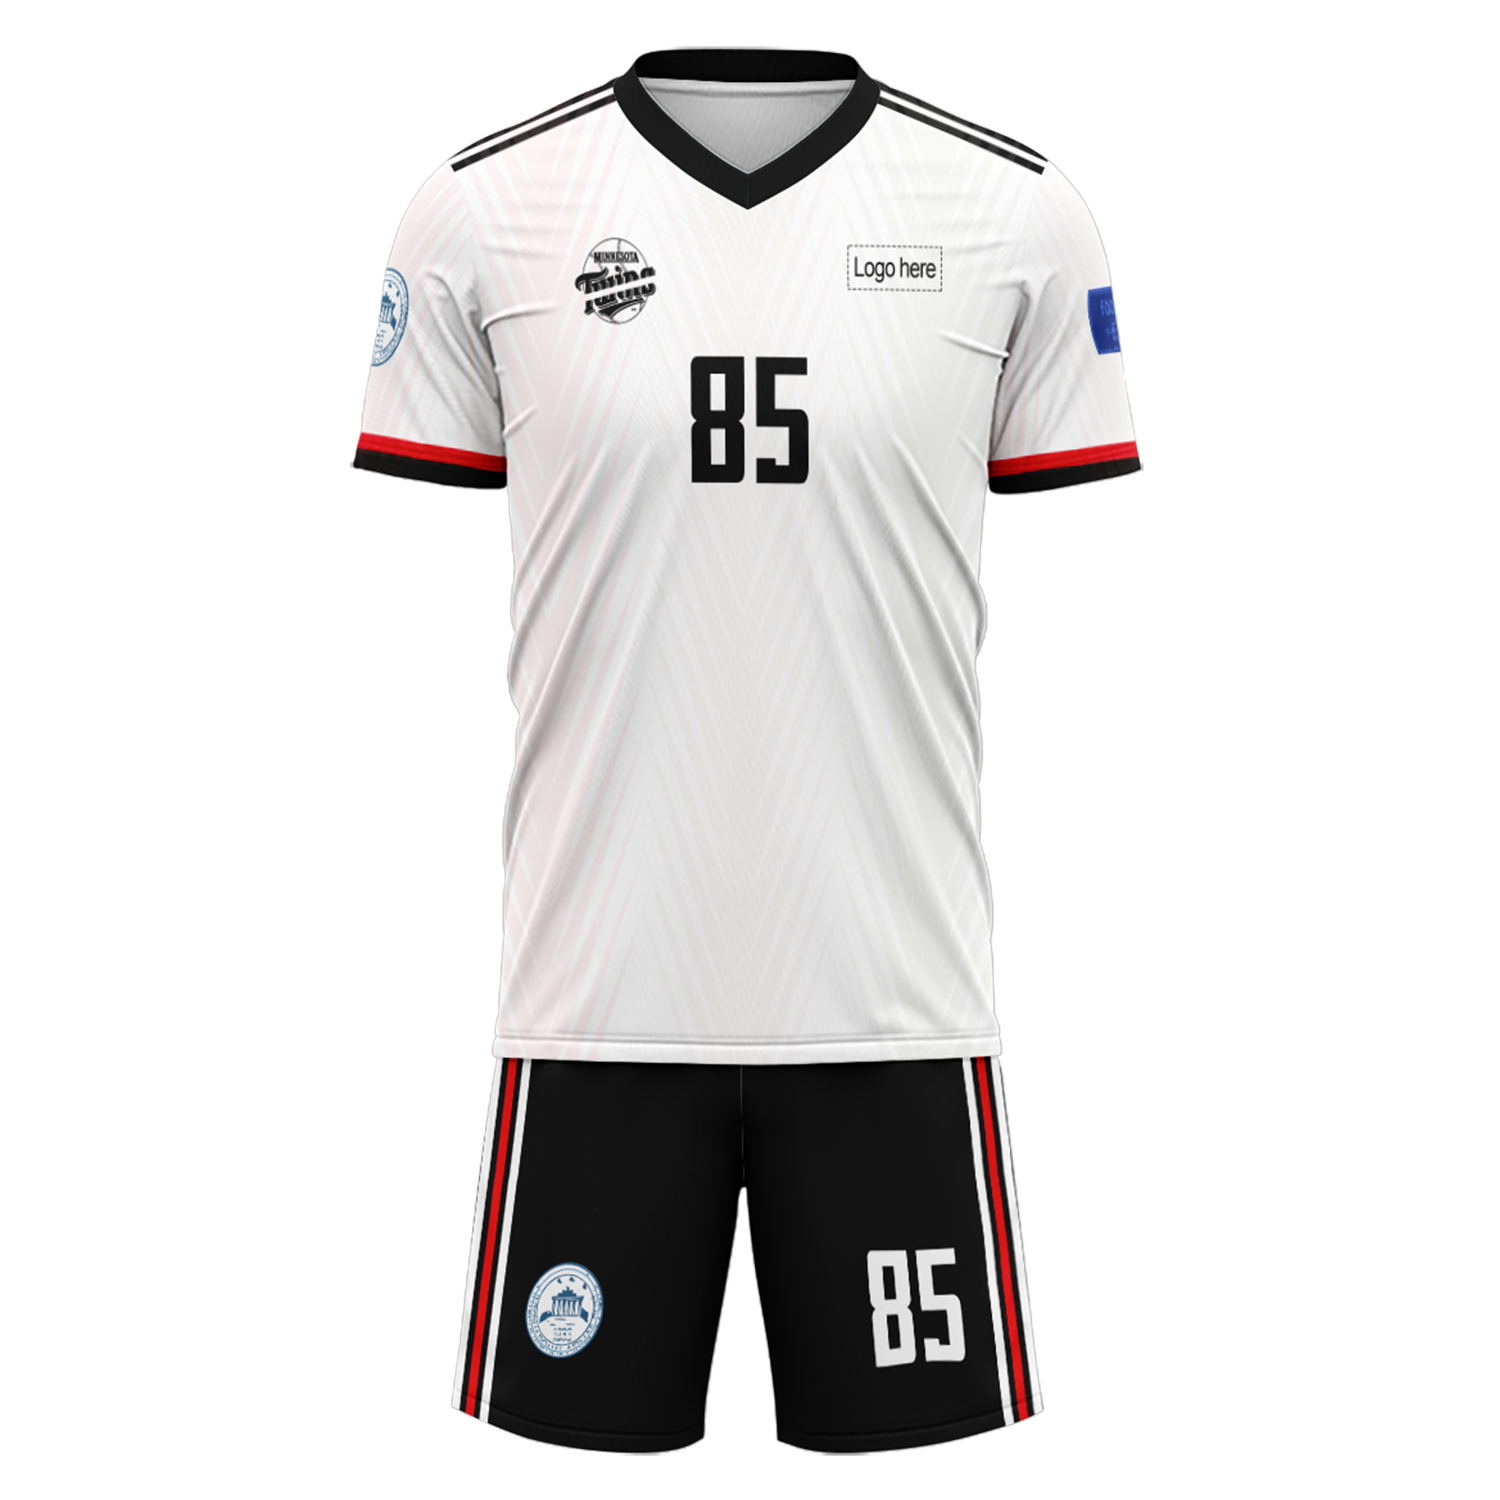 Custom Japan Team Football Suits Personalized Design Print on Demand Soccer Jerseys